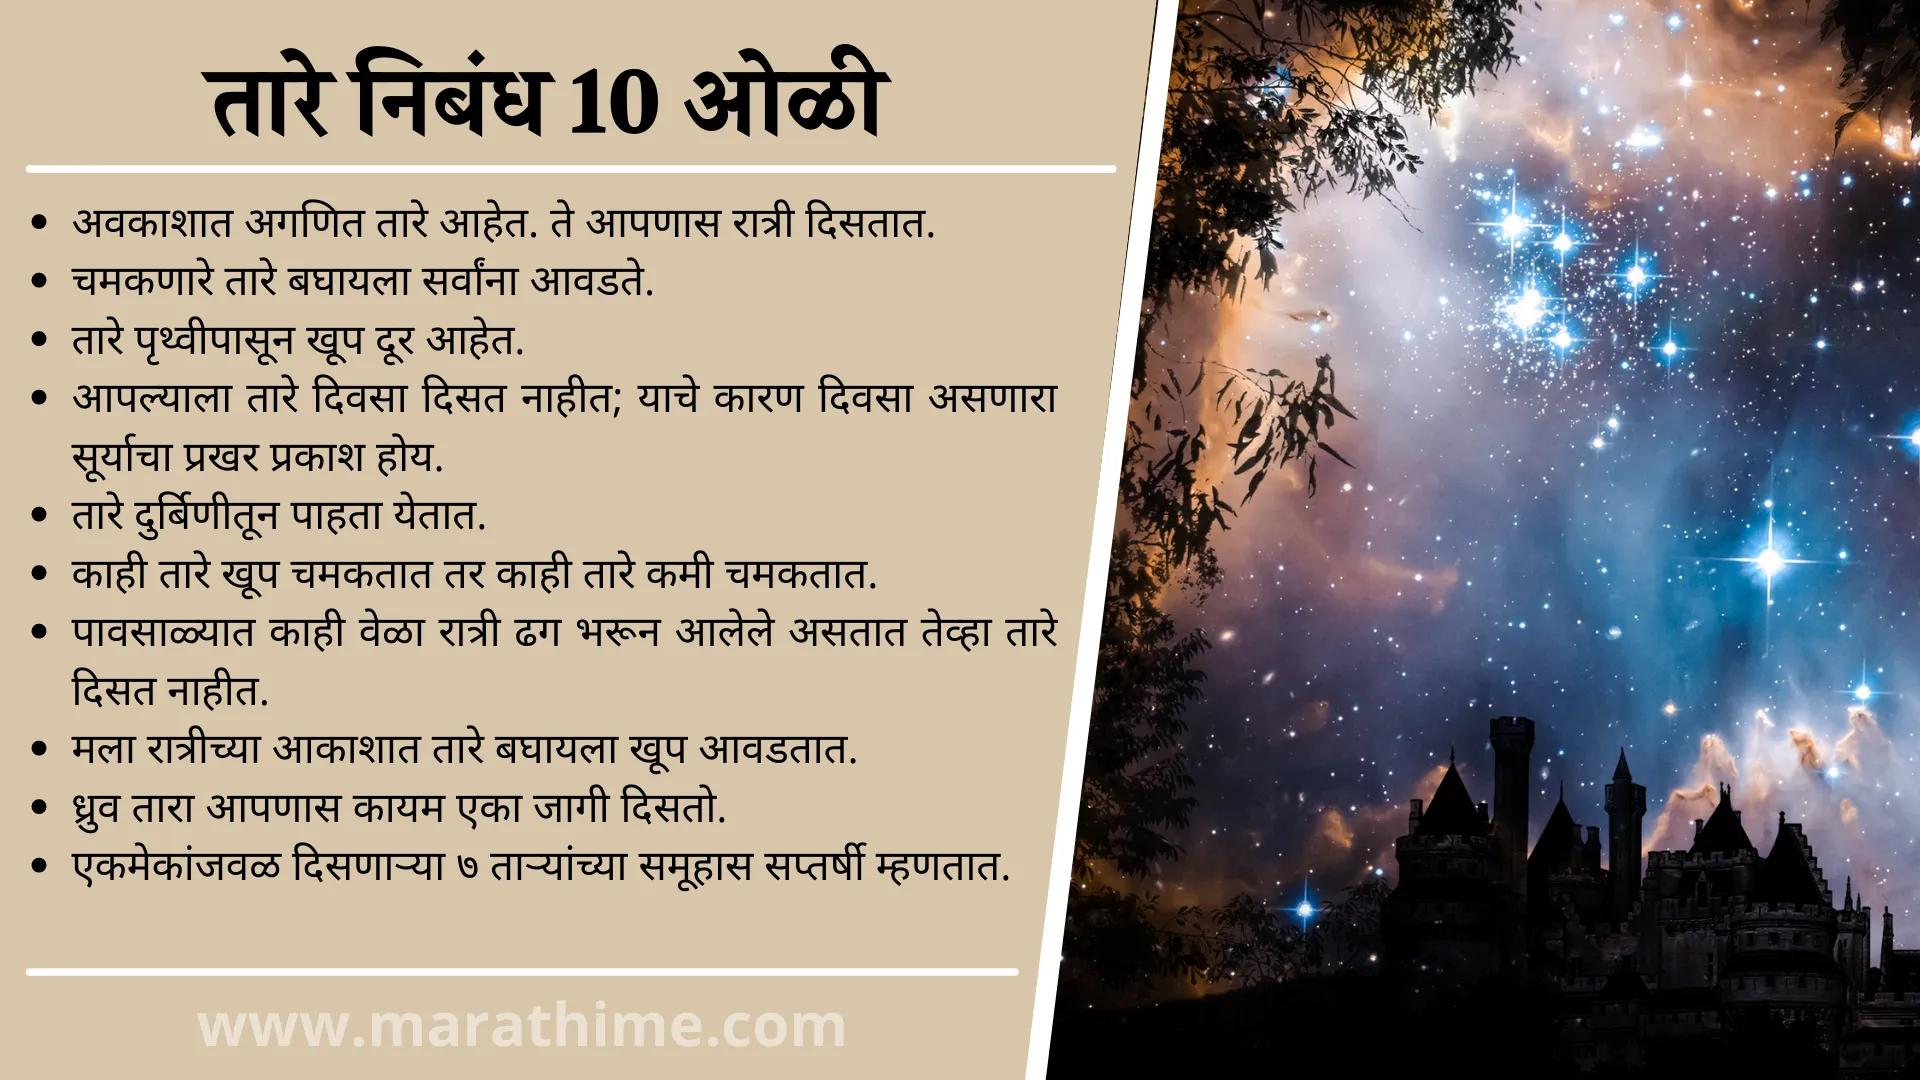 तारे निबंध 10 ओळी, 10 Lines On Stars in Marathi